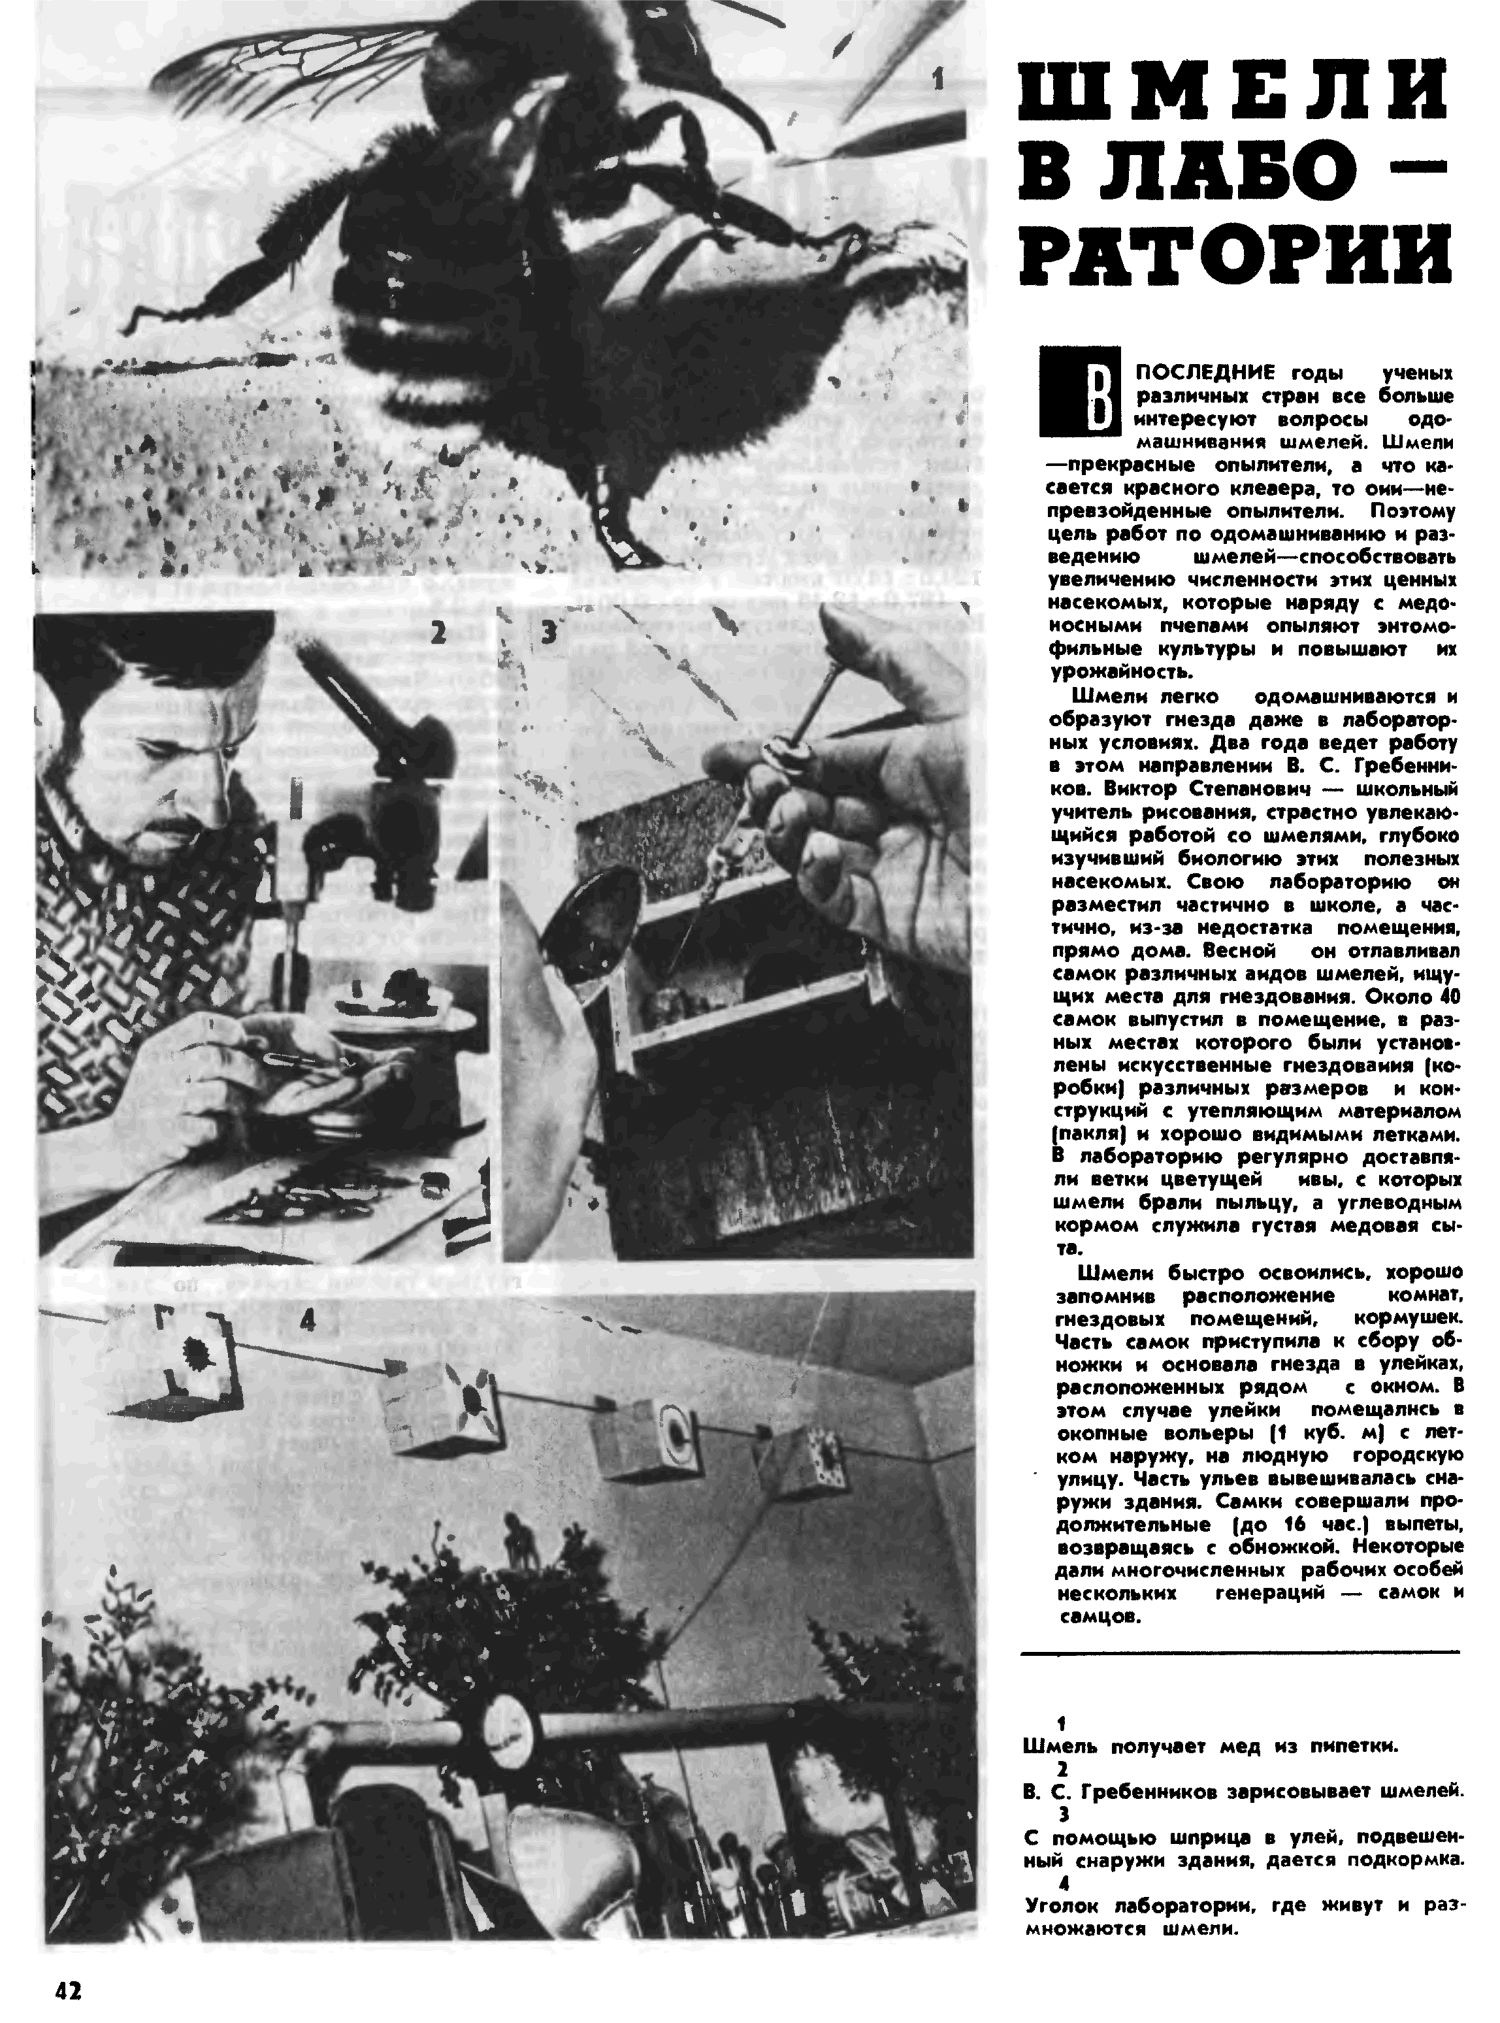 Шмели в лаборатории. А.П. Цыганок. Пчеловодство, 1971, №8, с.42. Фотокопия №1